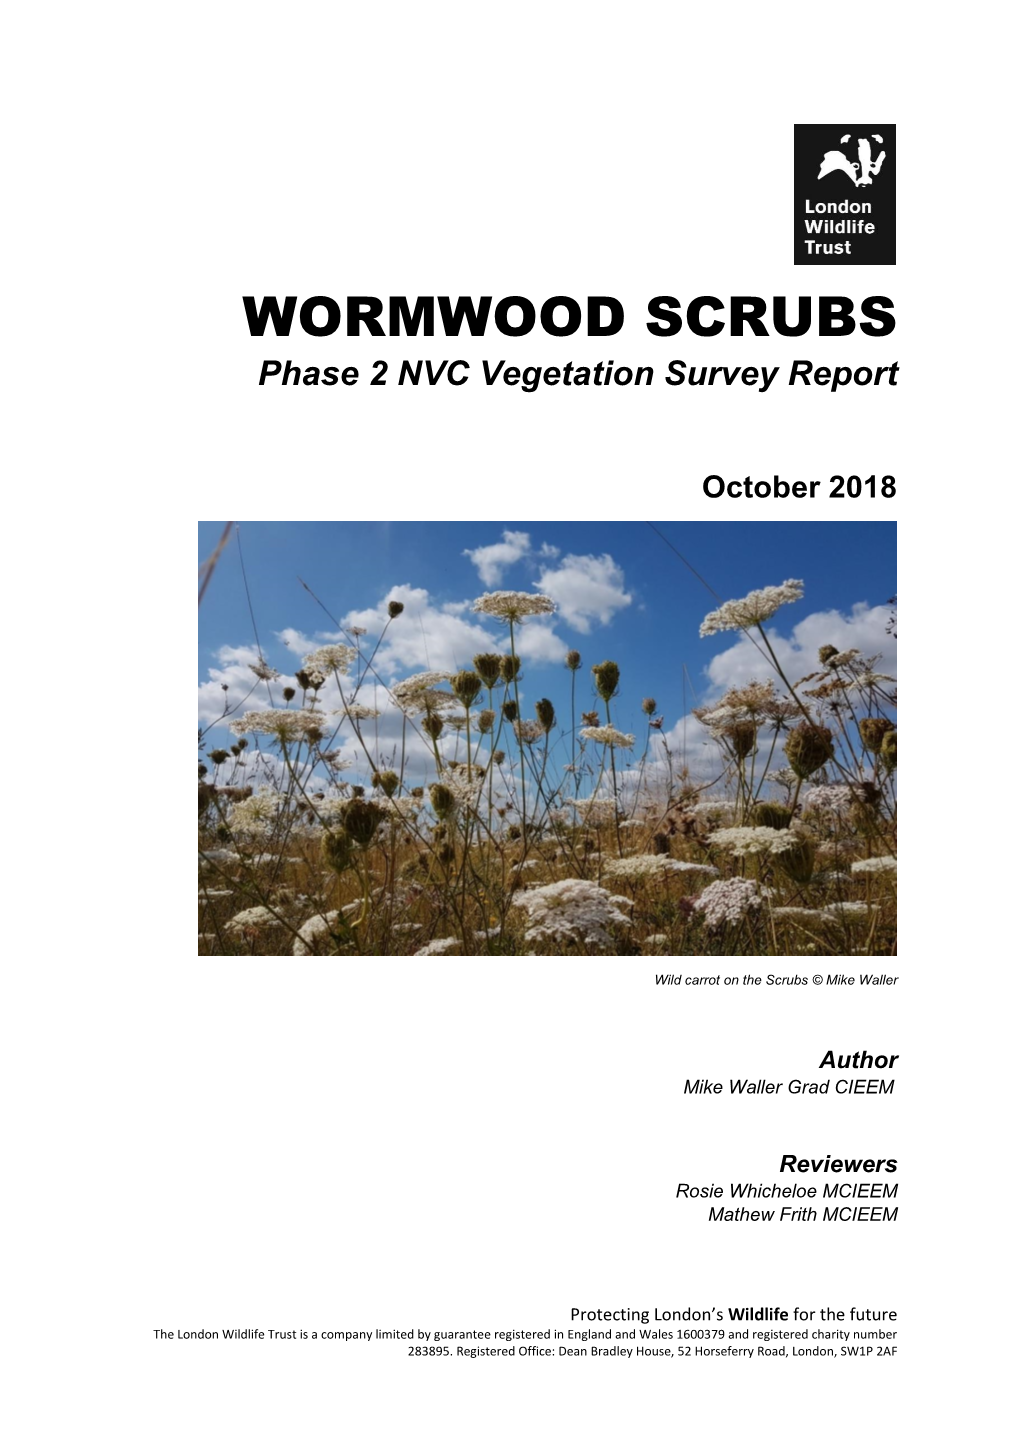 WORMWOOD SCRUBS Phase 2 NVC Vegetation Survey Report